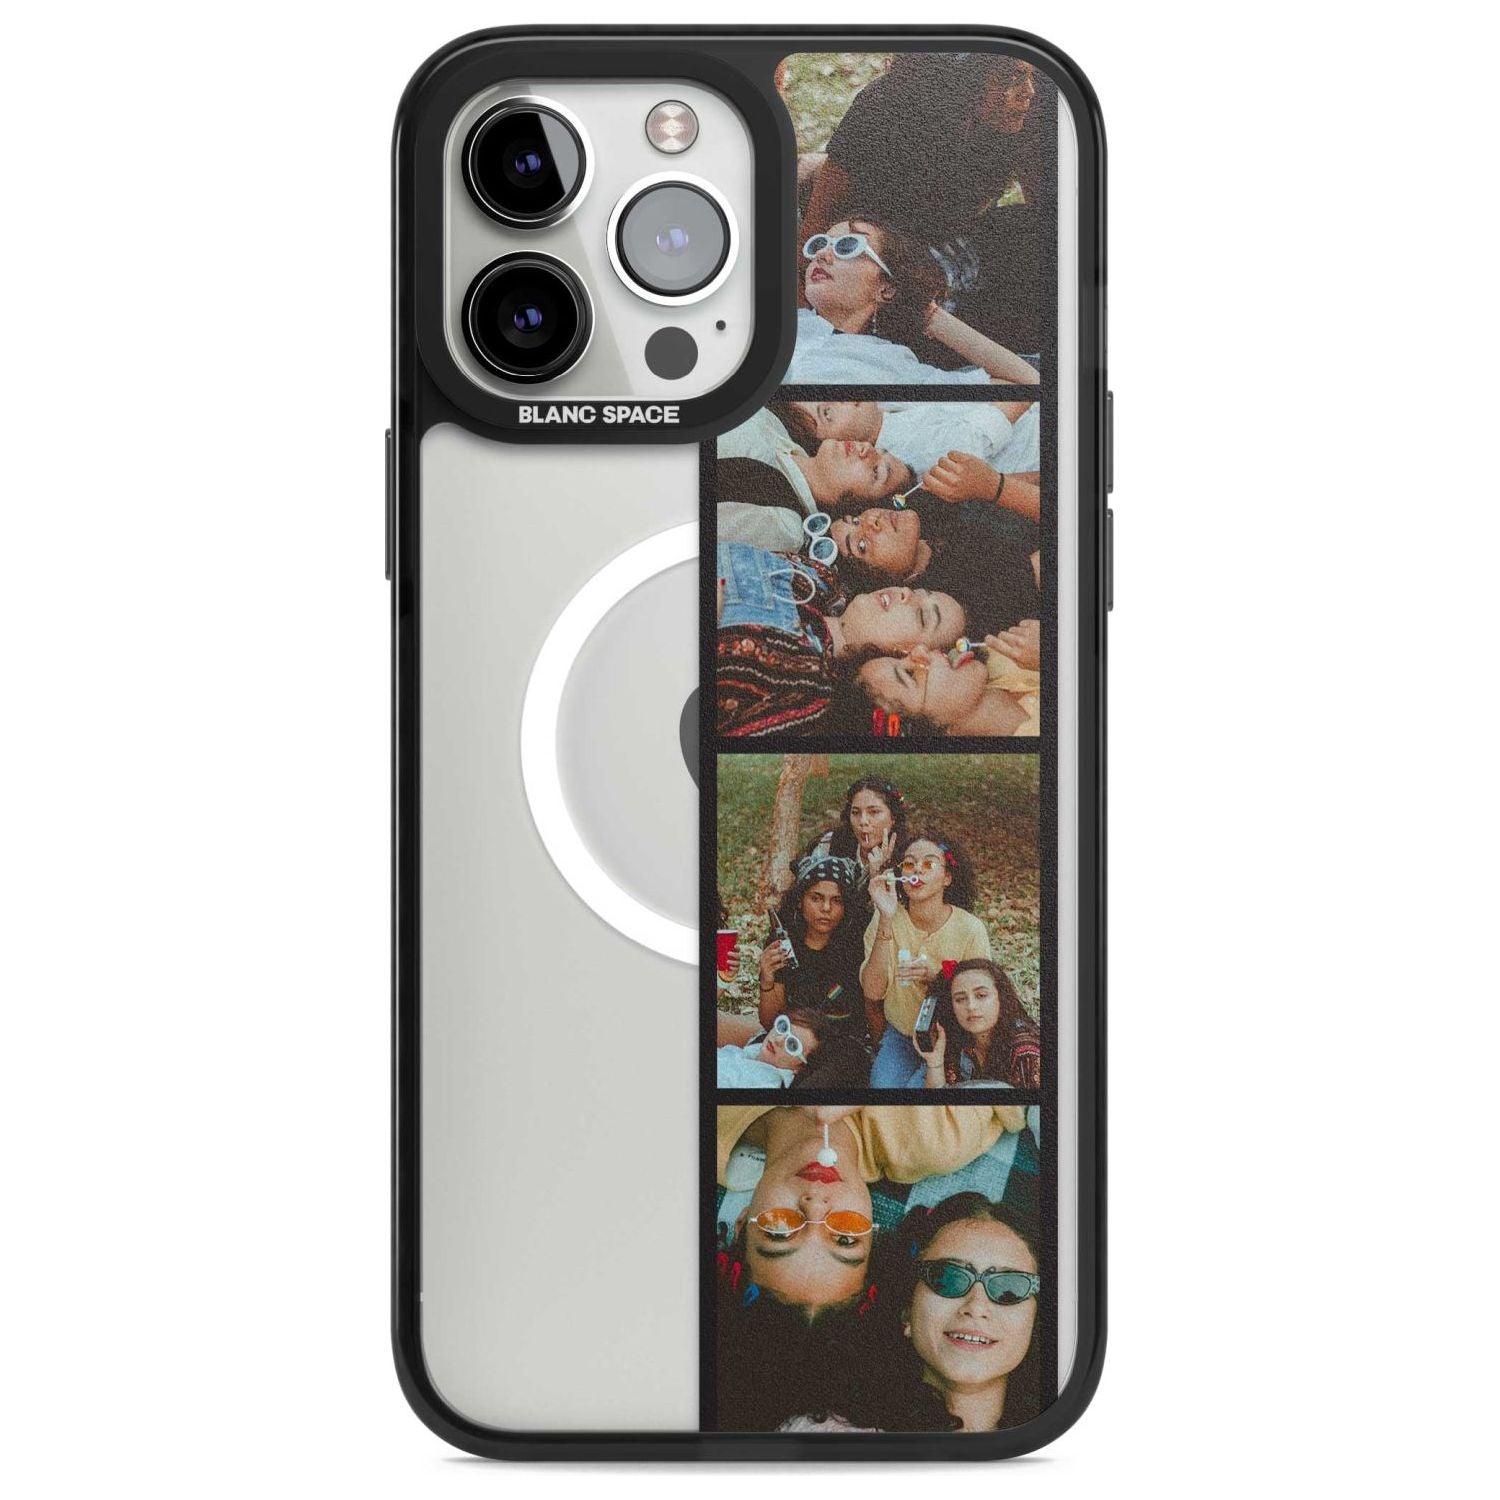 Personalised Photo Strip Custom Phone Case iPhone 13 Pro Max / Magsafe Black Impact Case Blanc Space